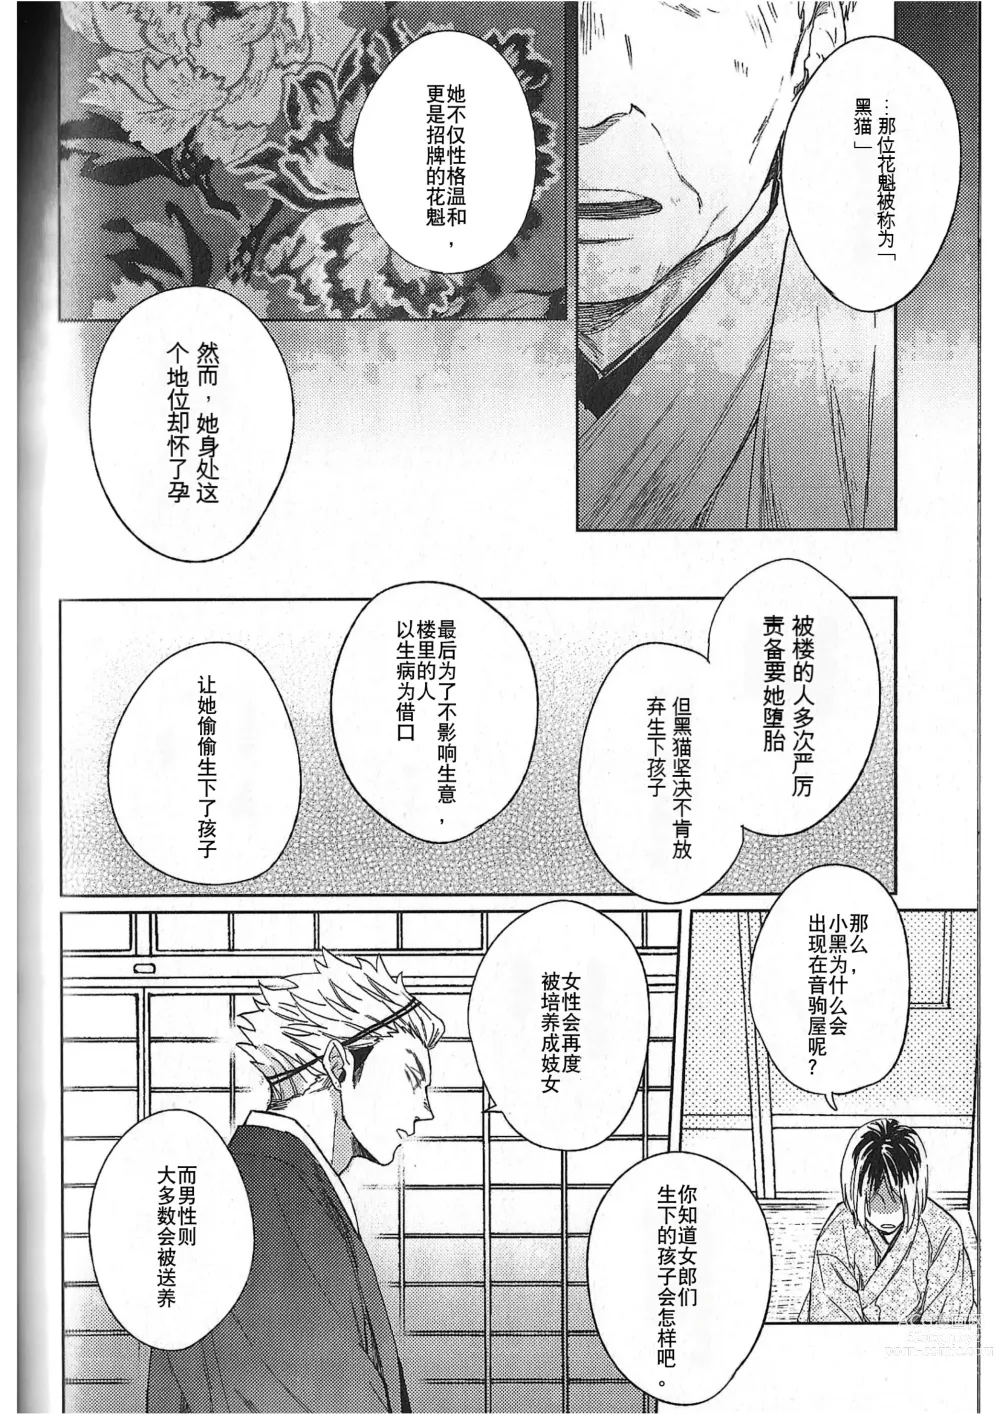 Page 25 of doujinshi 破晓之枭后篇